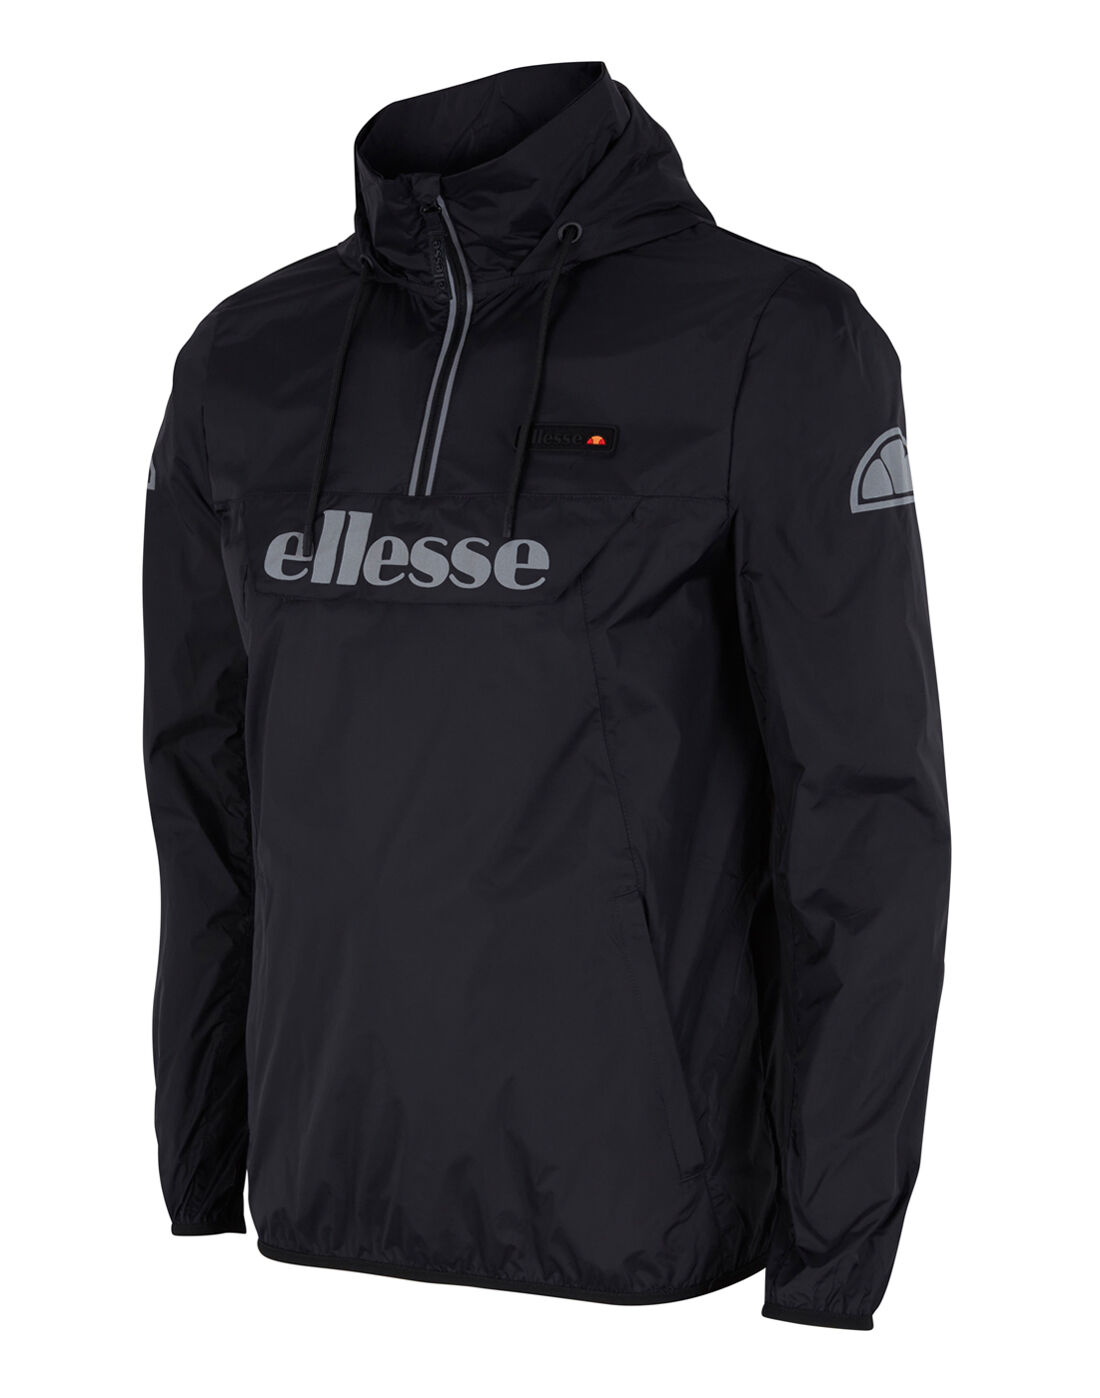 ellesse overhead jacket with reflective logo in black